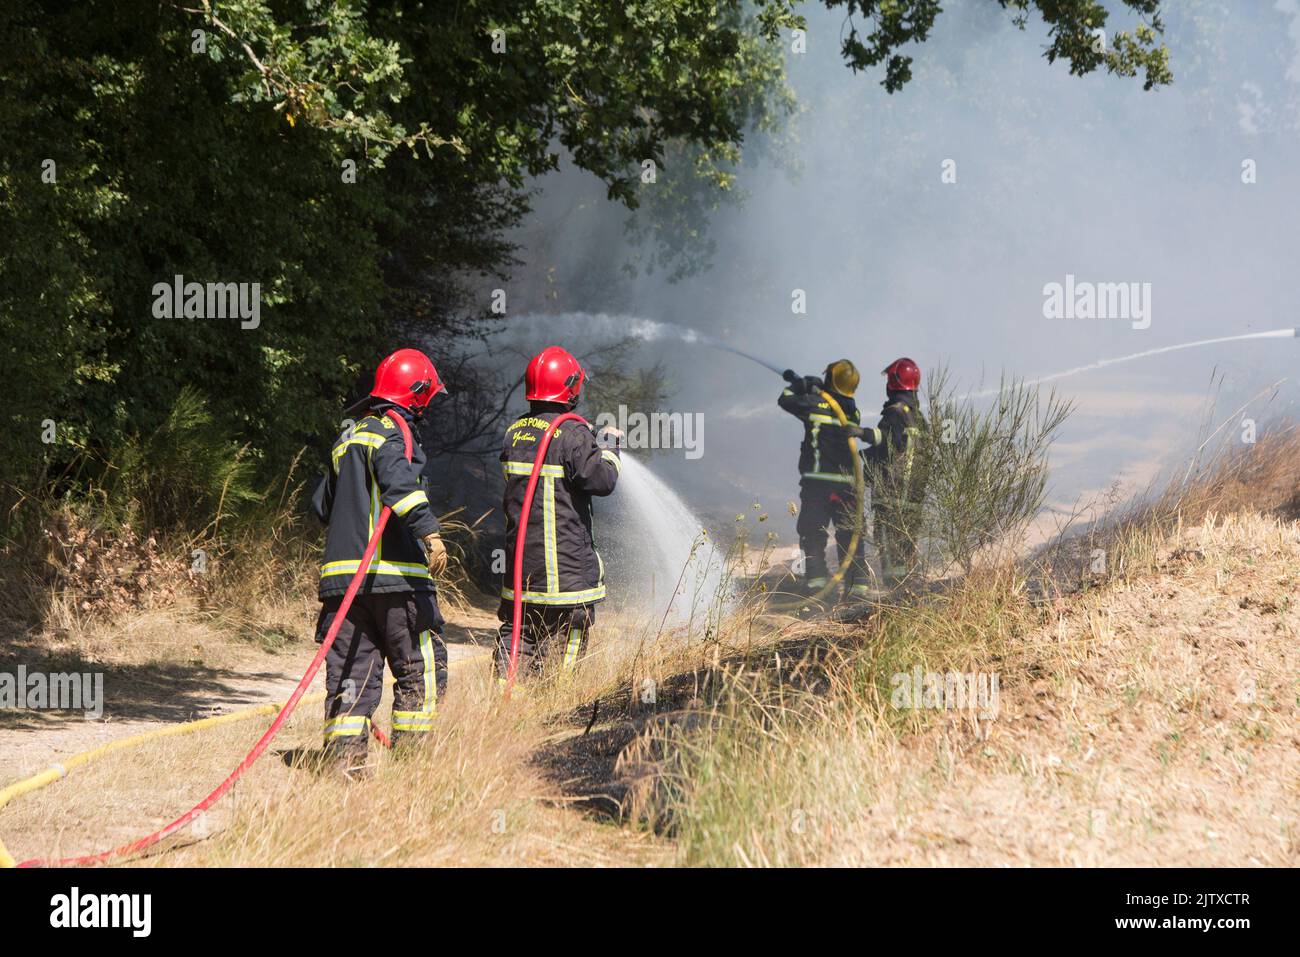 Firefighters extinguishing a stubble fire in a field already harvested, Eure-et-Loir department, Centre-Val-de-Loire region, France, Europe. Stock Photo